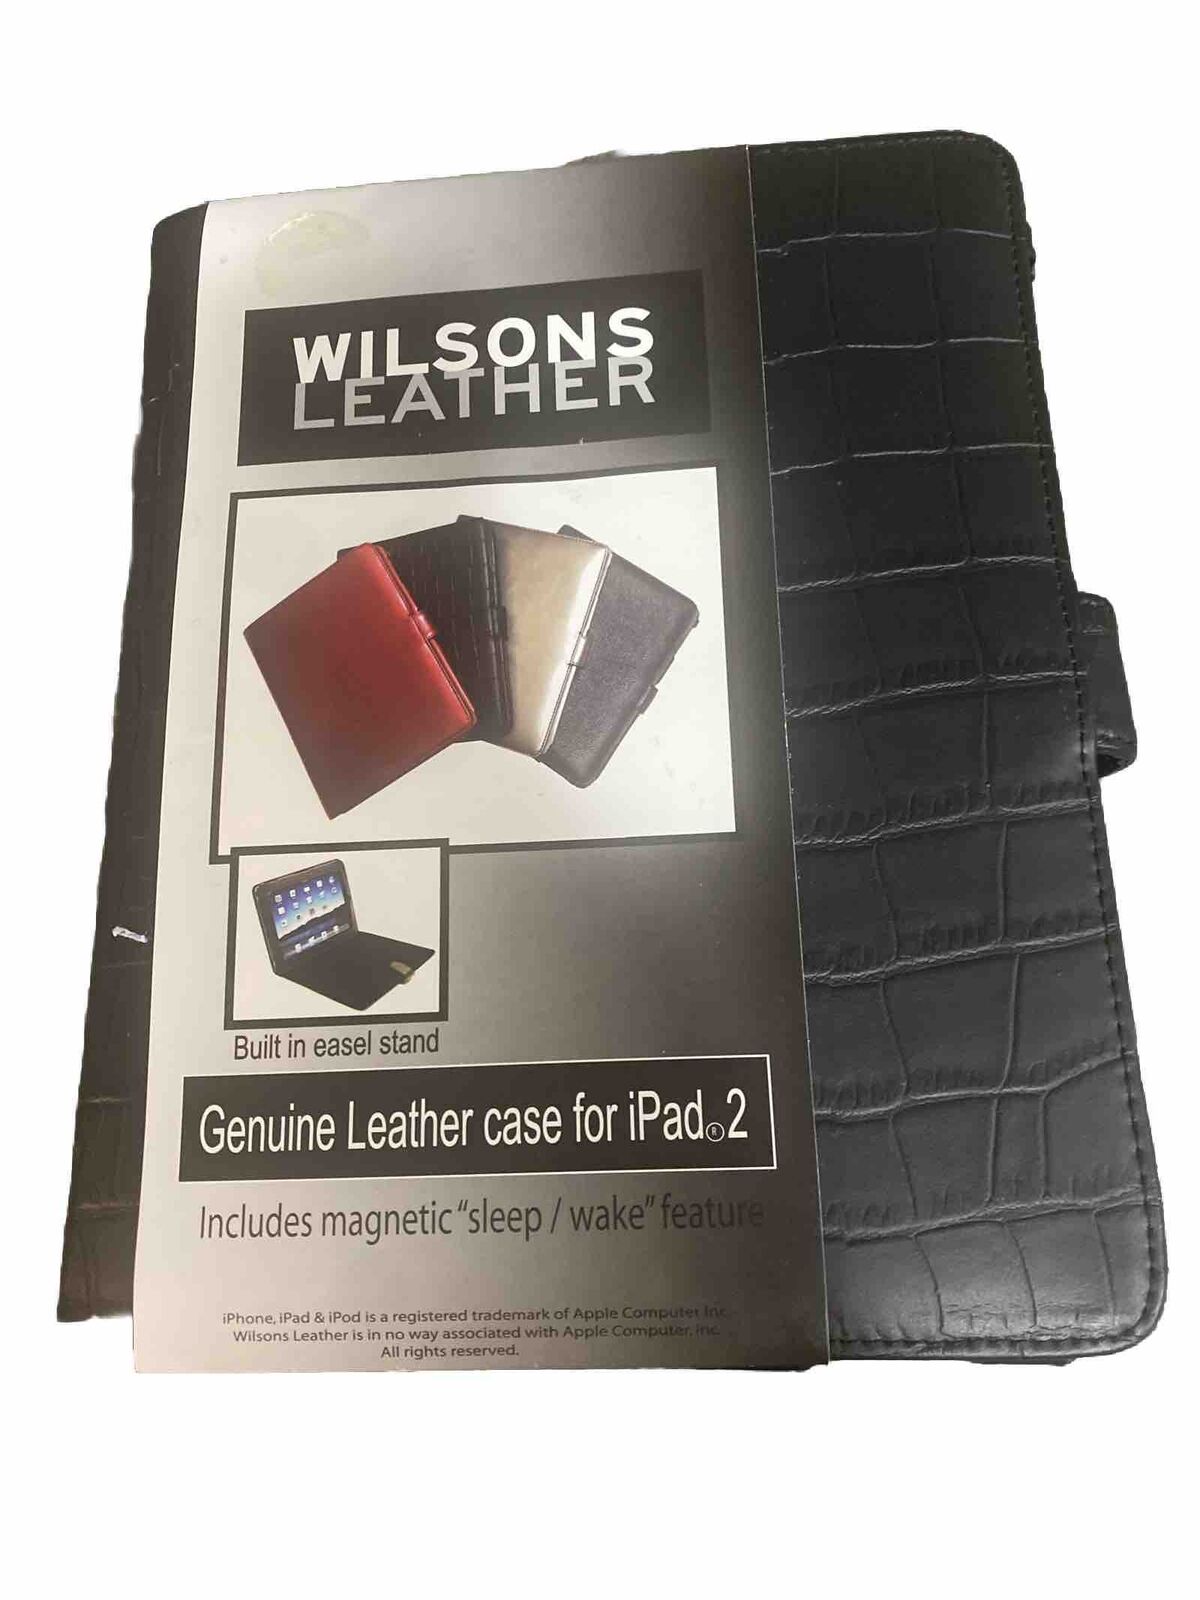 Wilson's Genuine Leather Case iPad 2, 3, 4 Generation Black Sleep/Wake 9.5x7.25